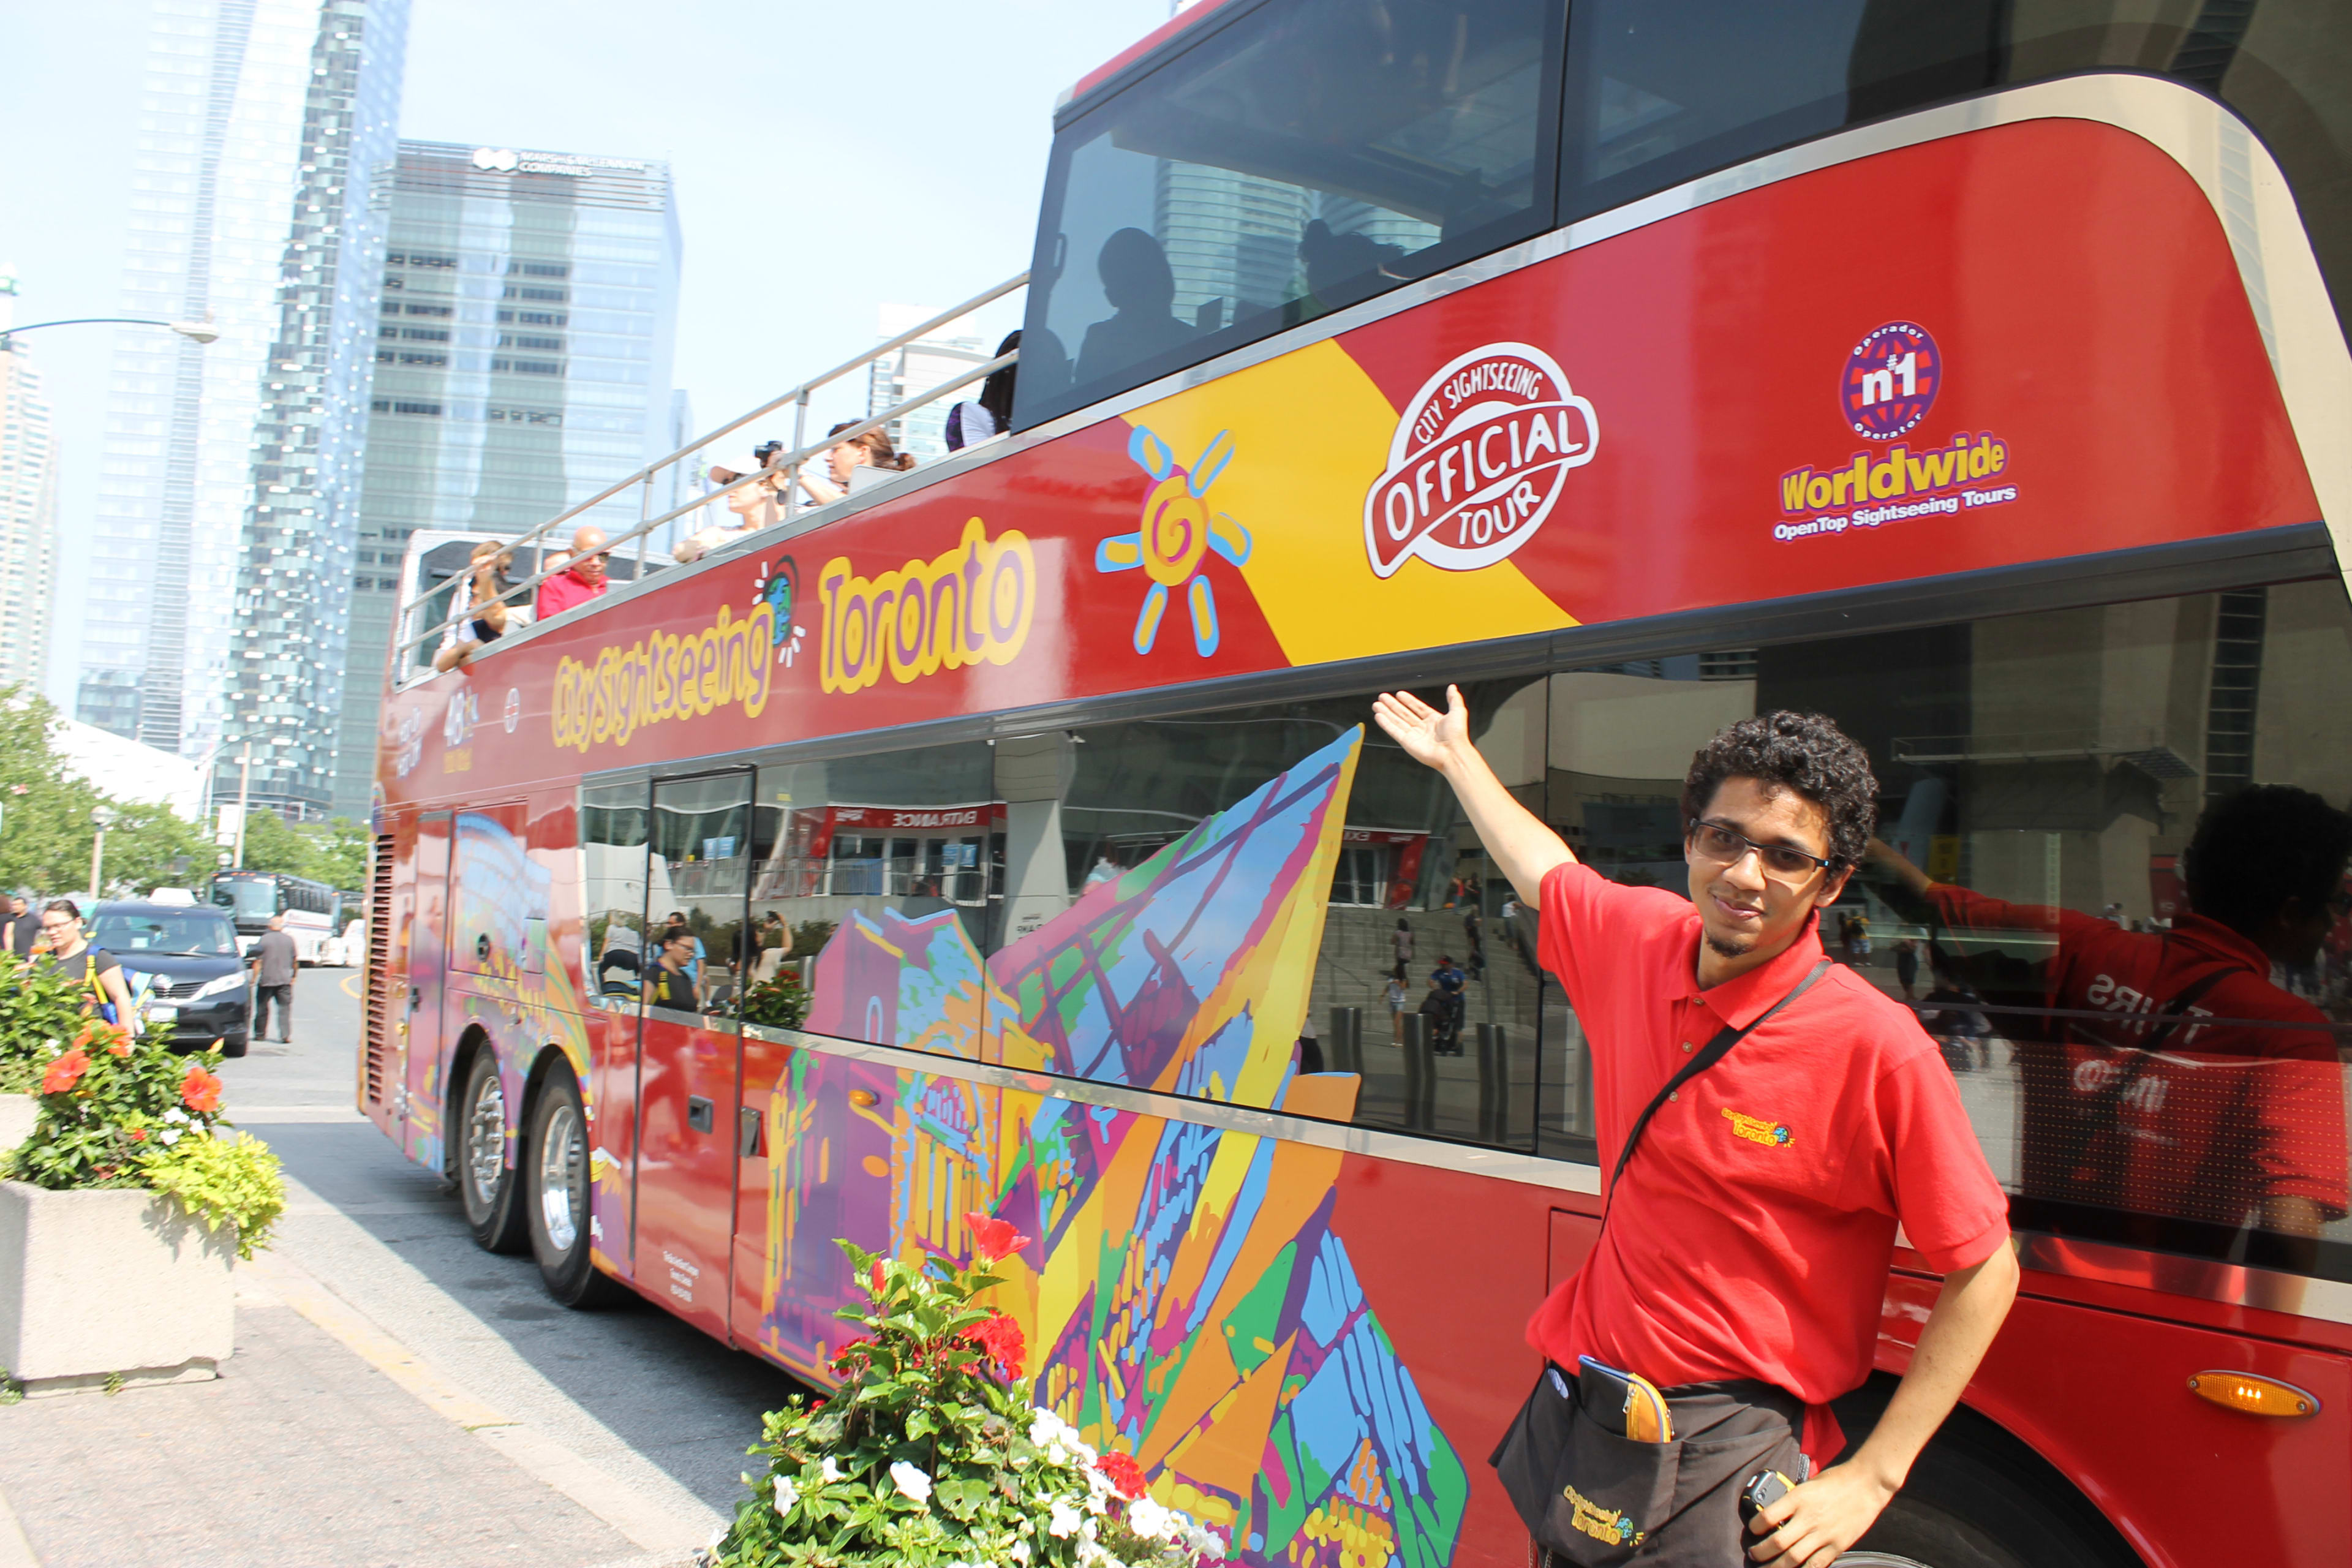 City Sightseeing Toronto double-decker tour bus